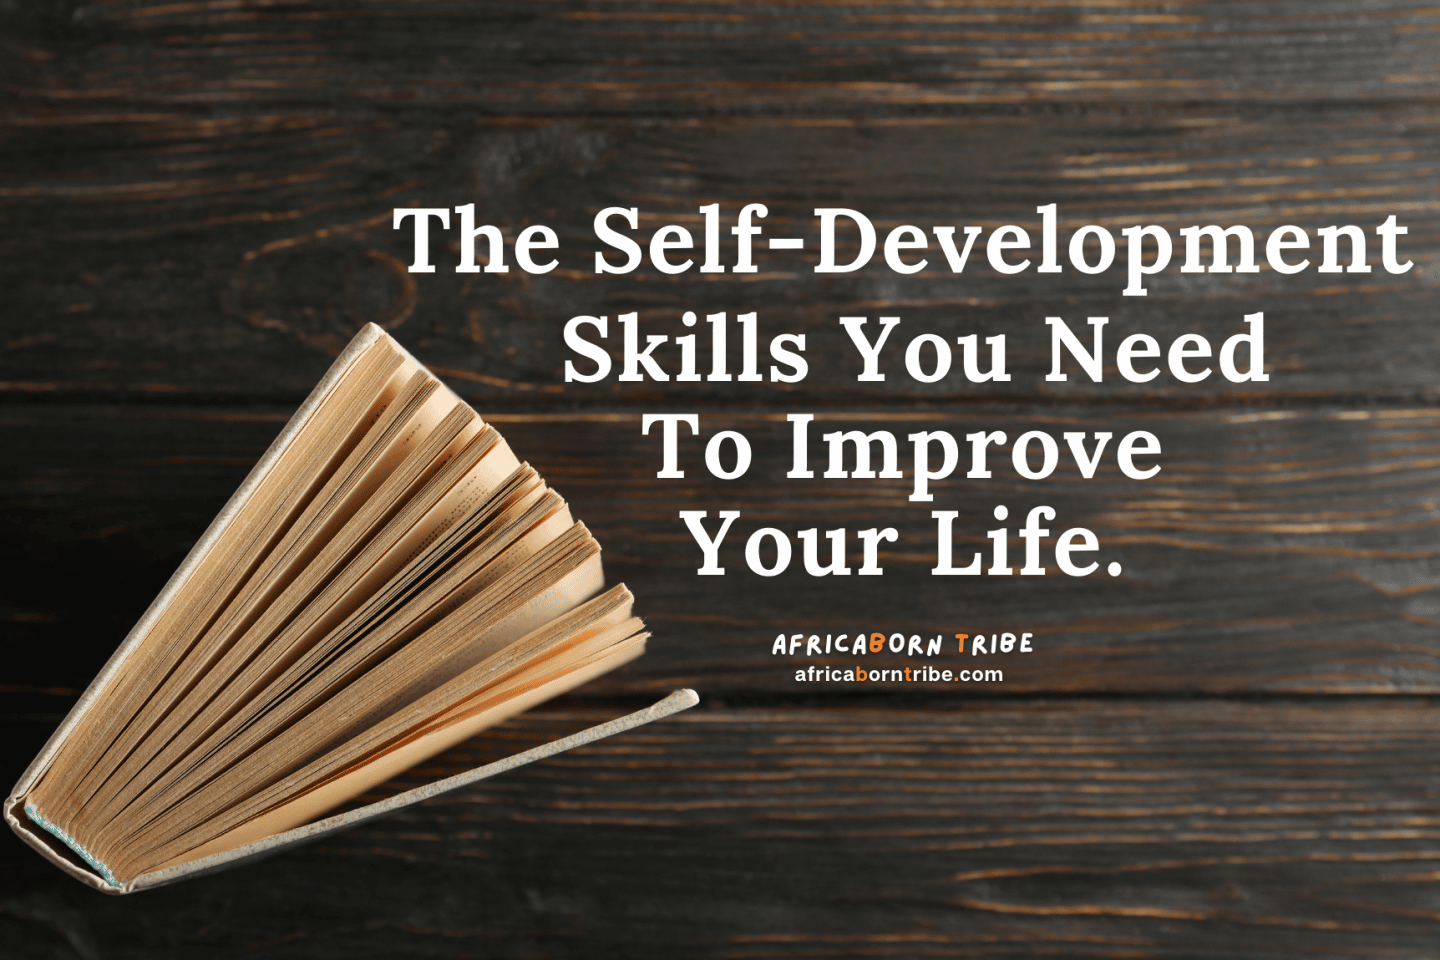 Self development